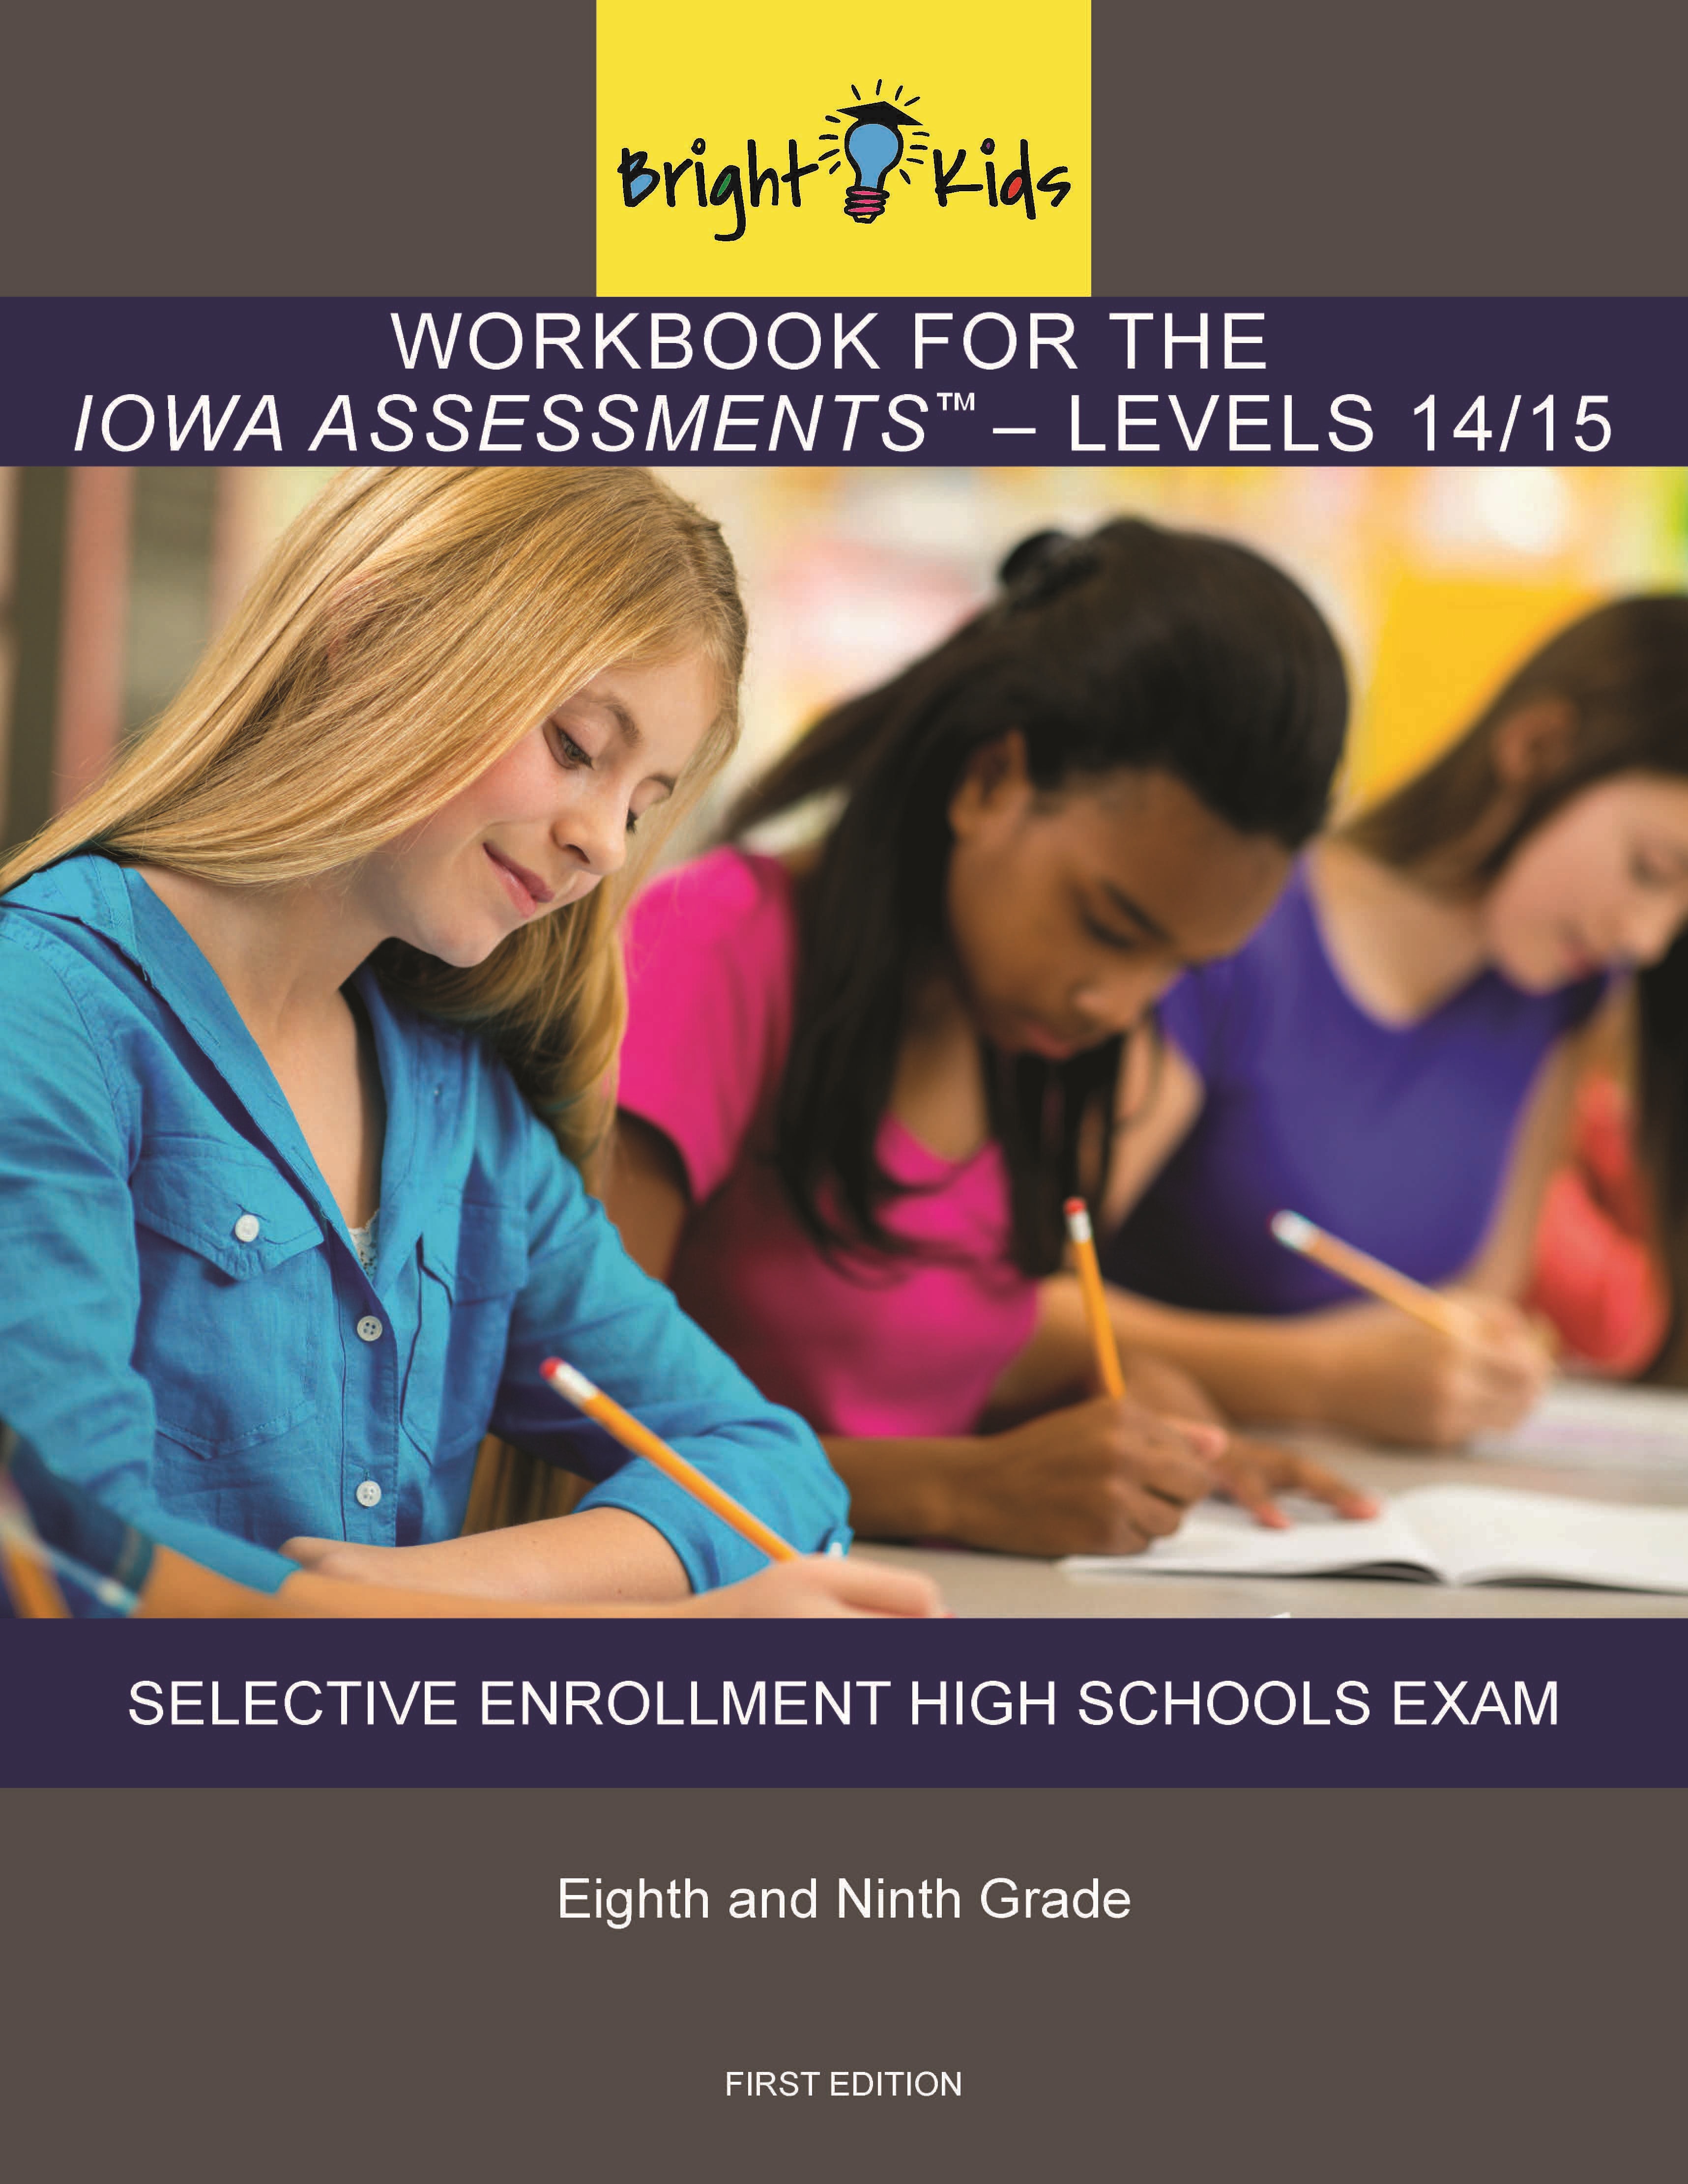 Iowa Assessment/SEHS Workbook 14/15